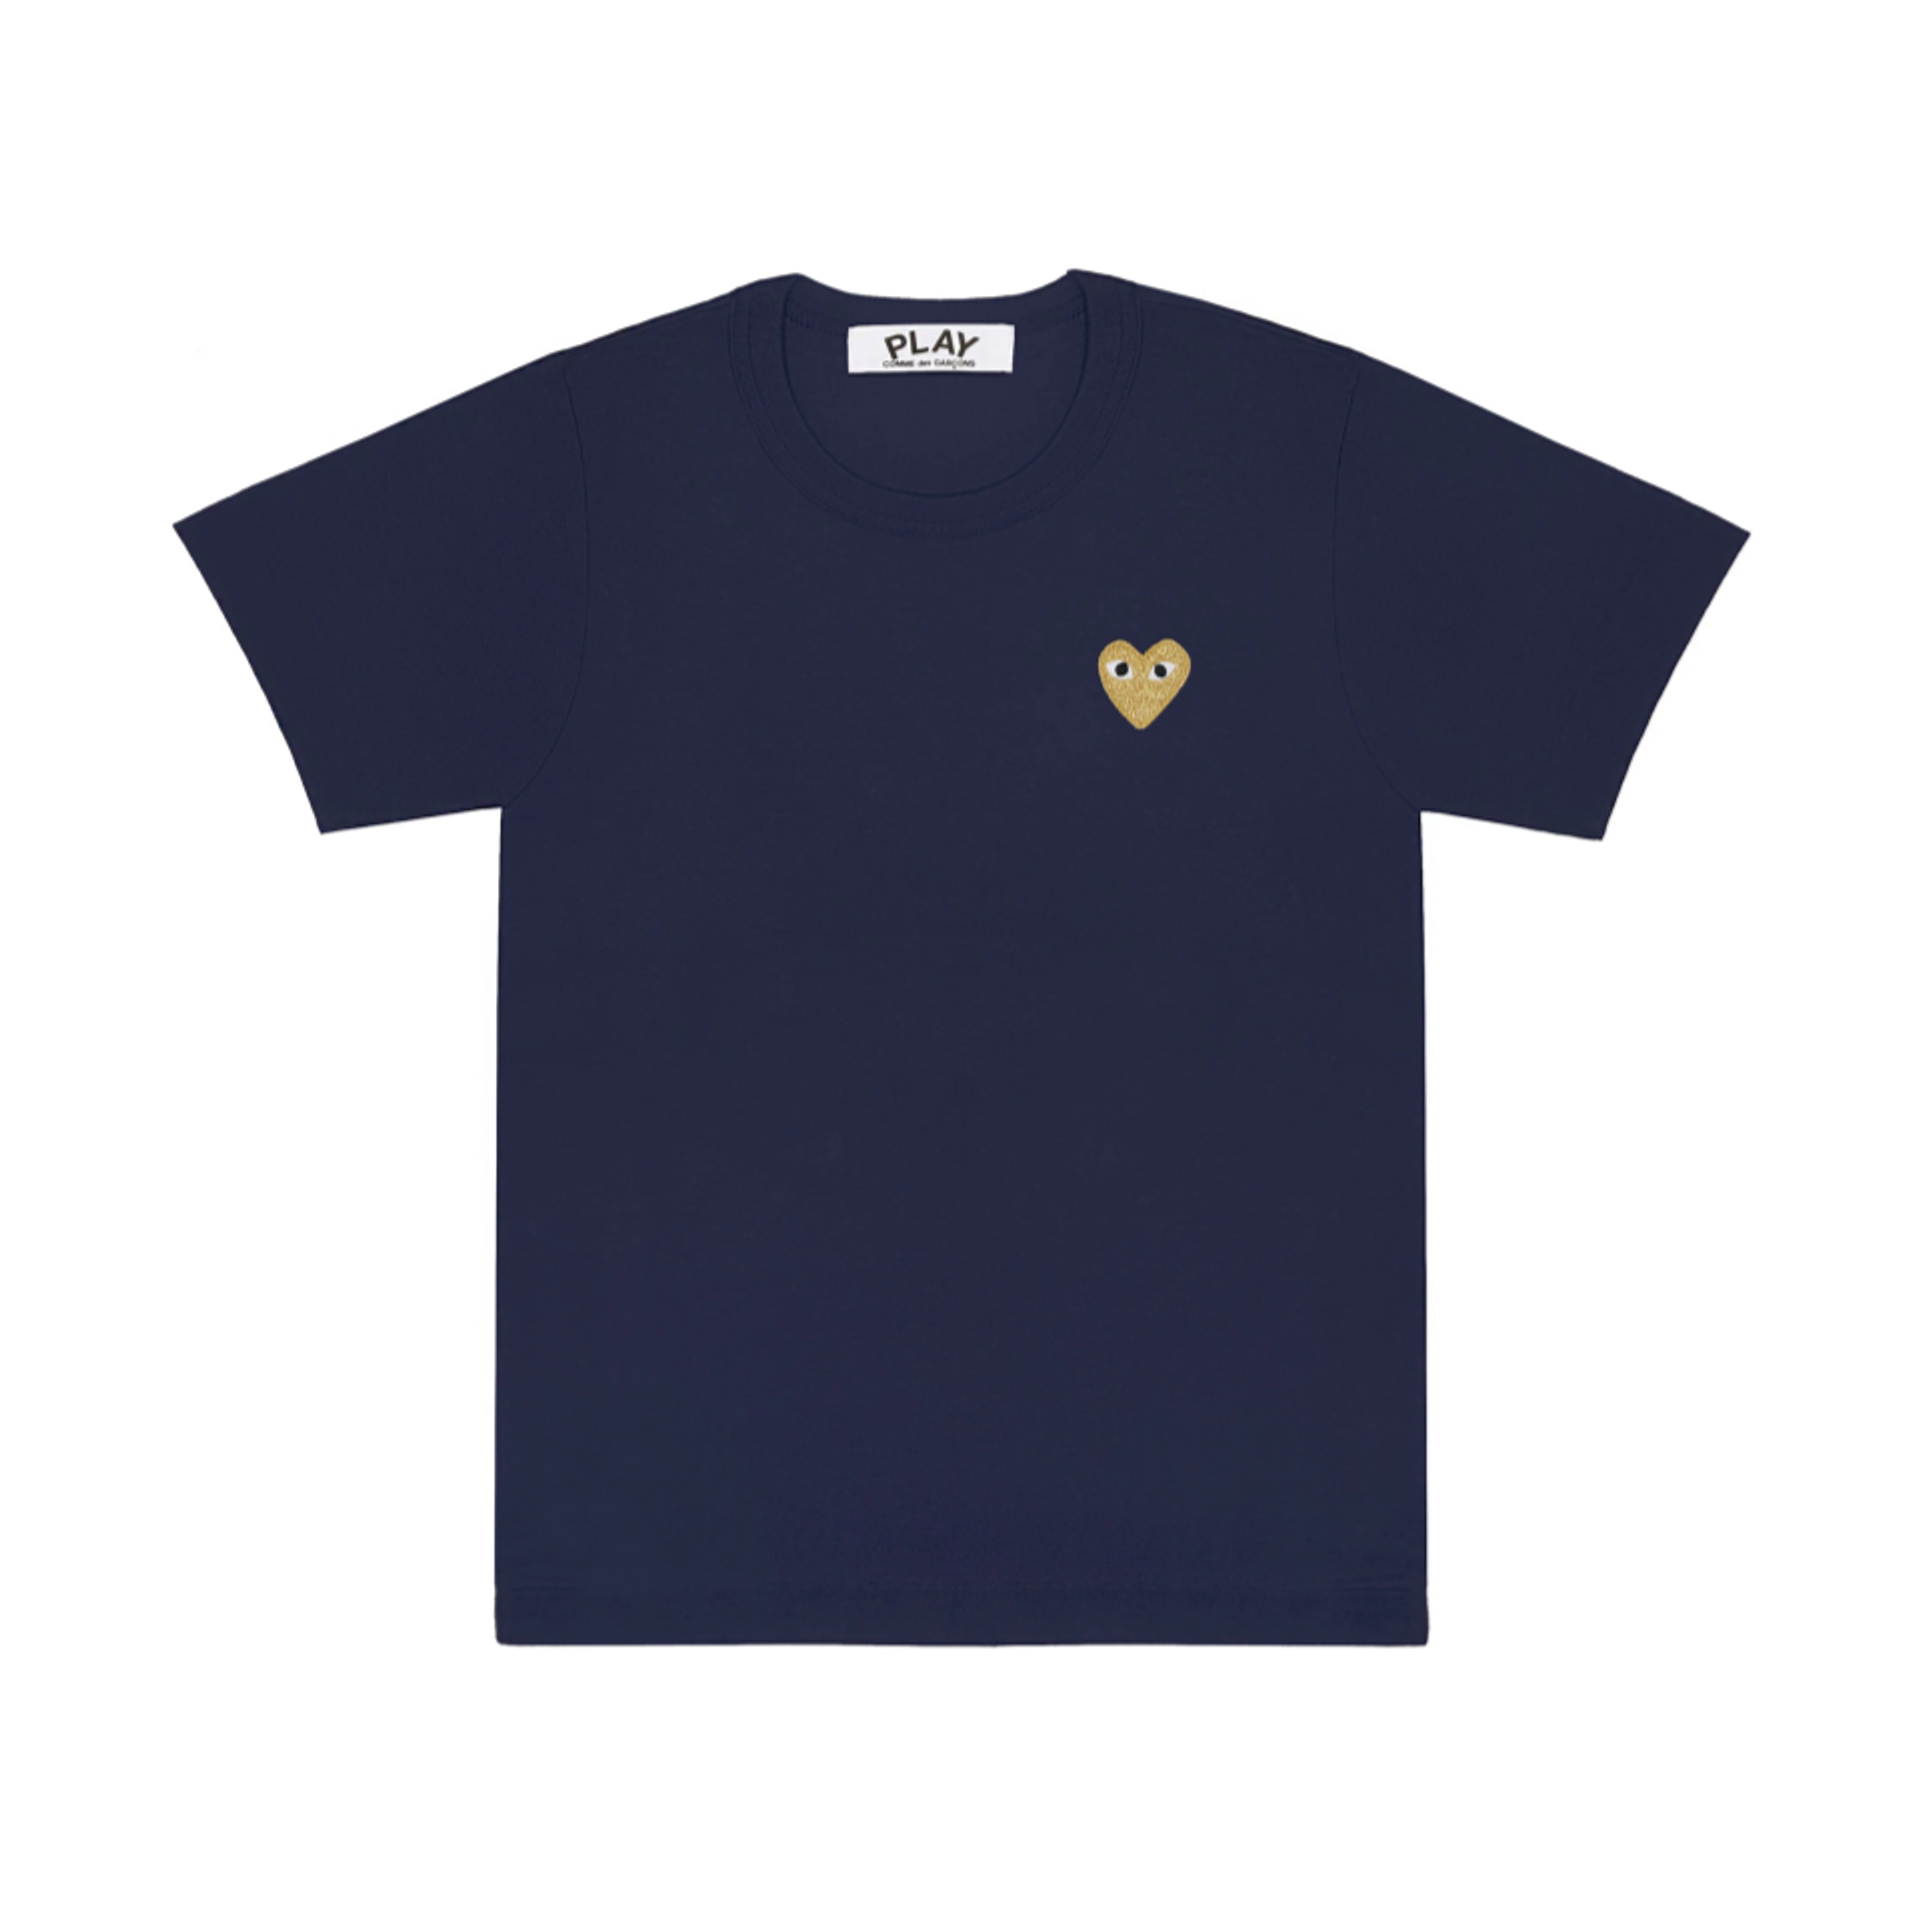 PLAY Gold Heart T-Shirt (Navy) Ladies'